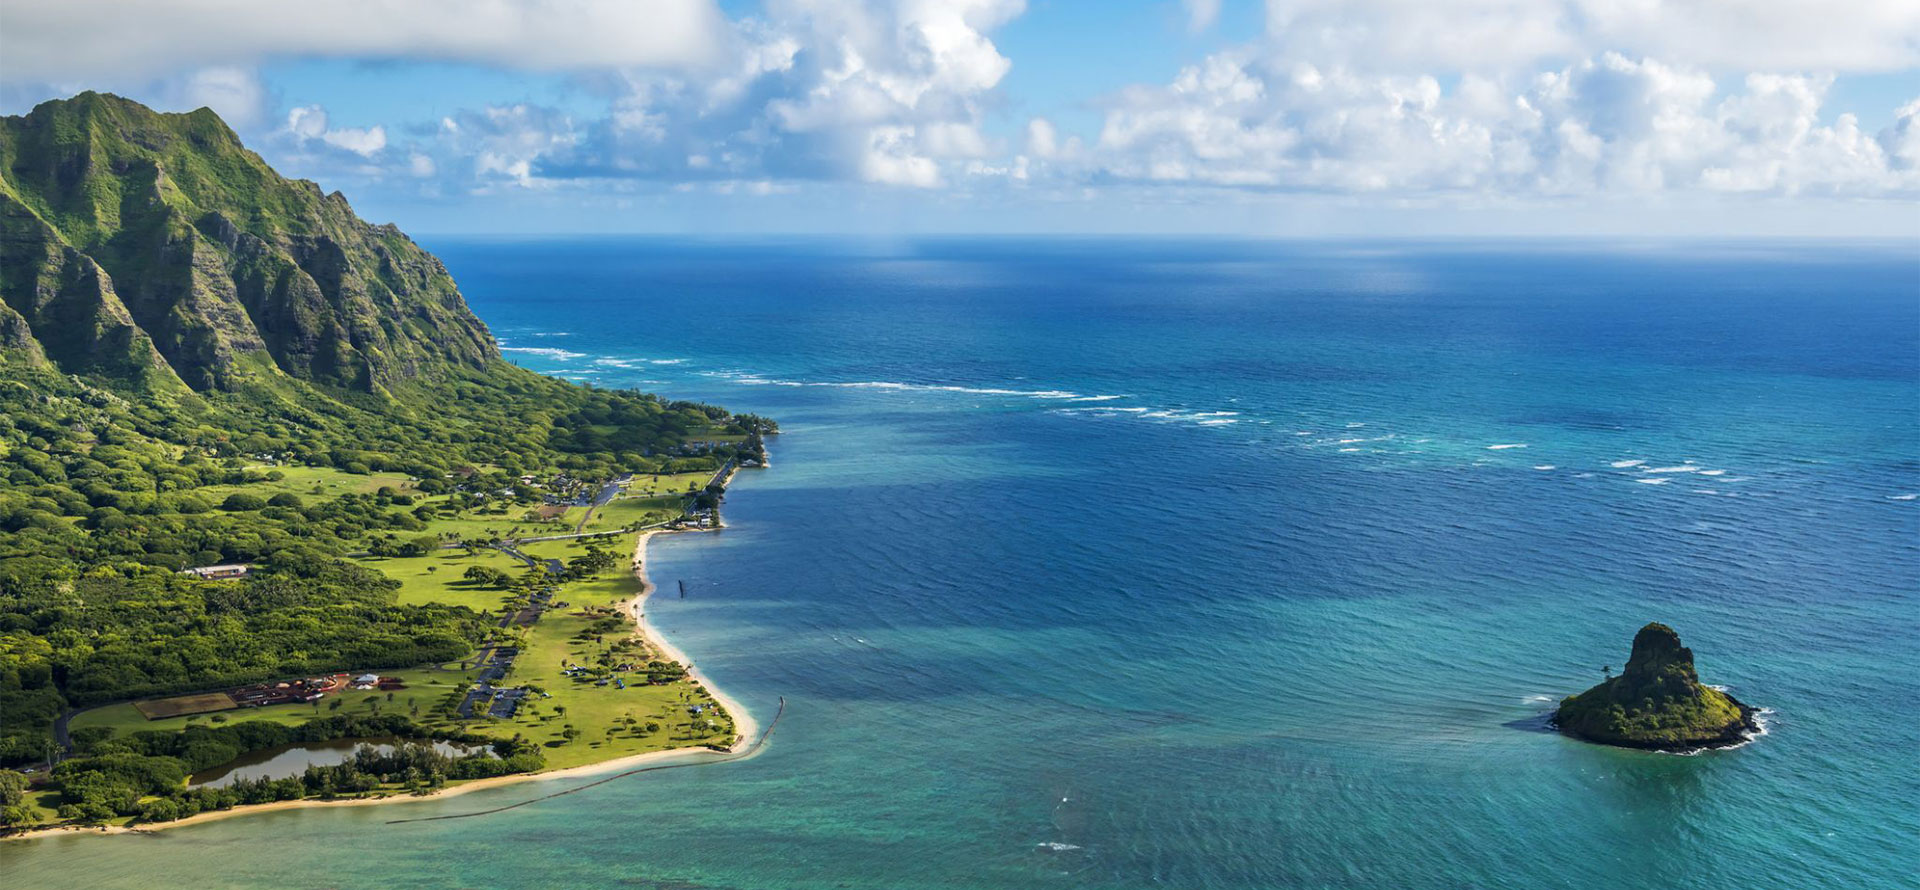 Bahamas vs hawaii landscape.